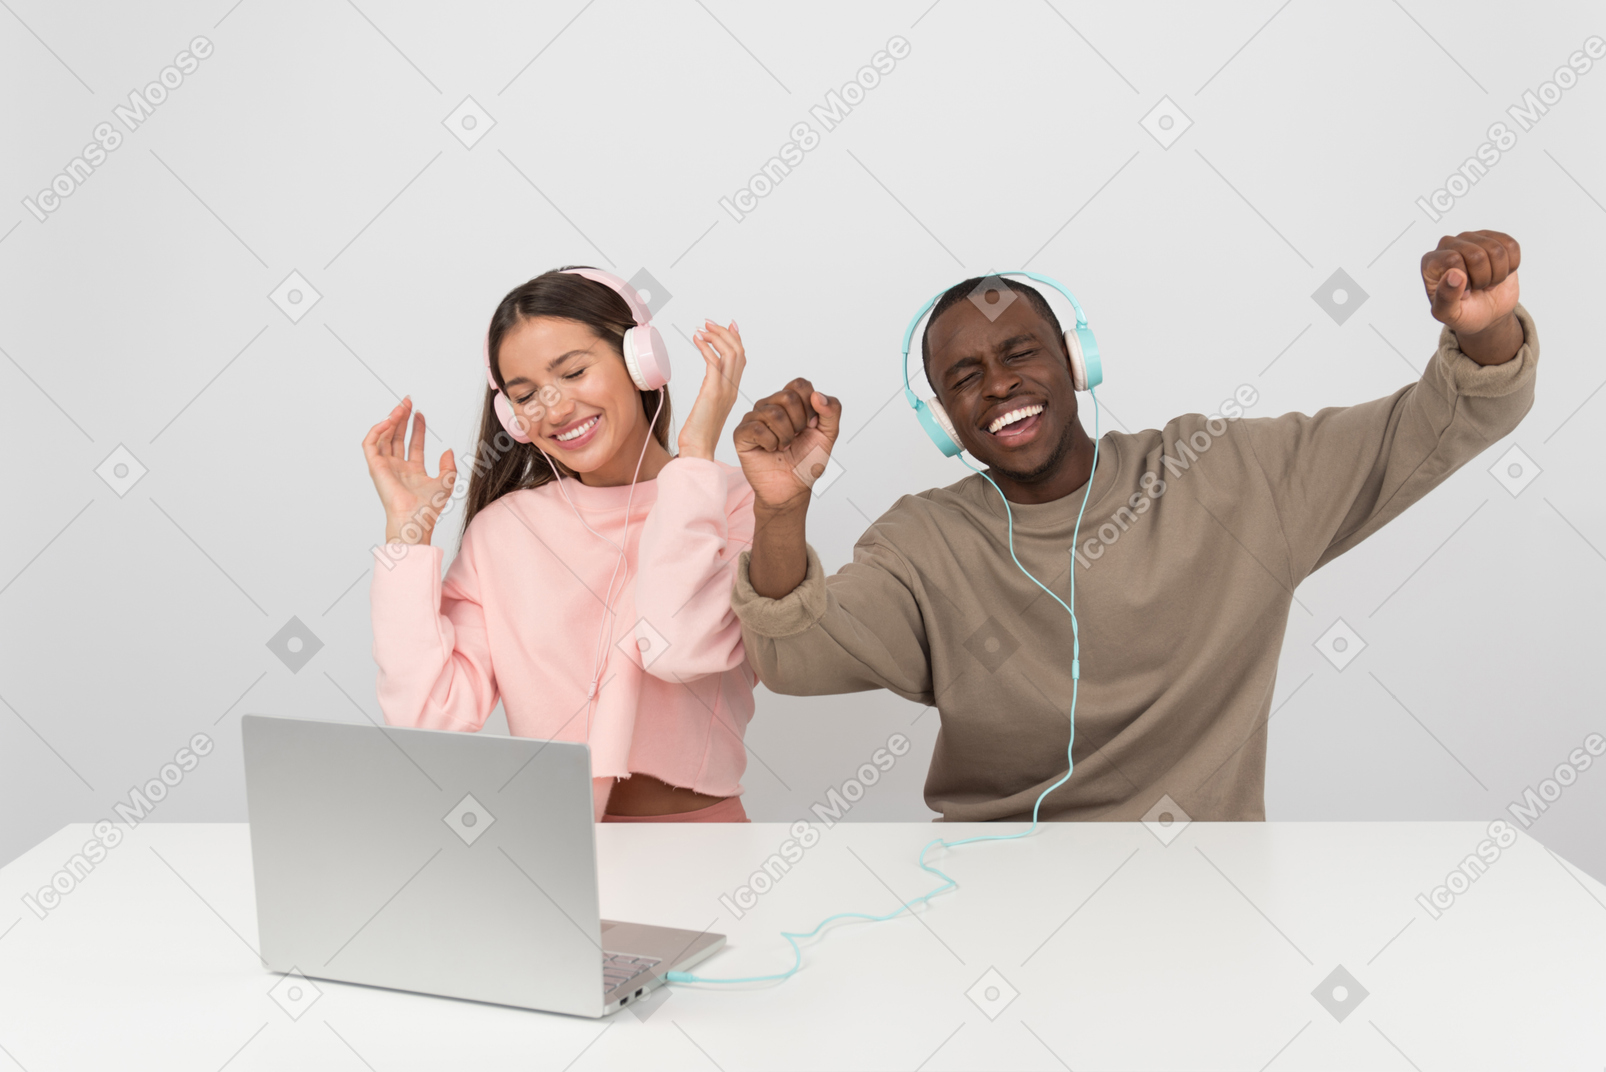 Attractive couple listening to music in headphones